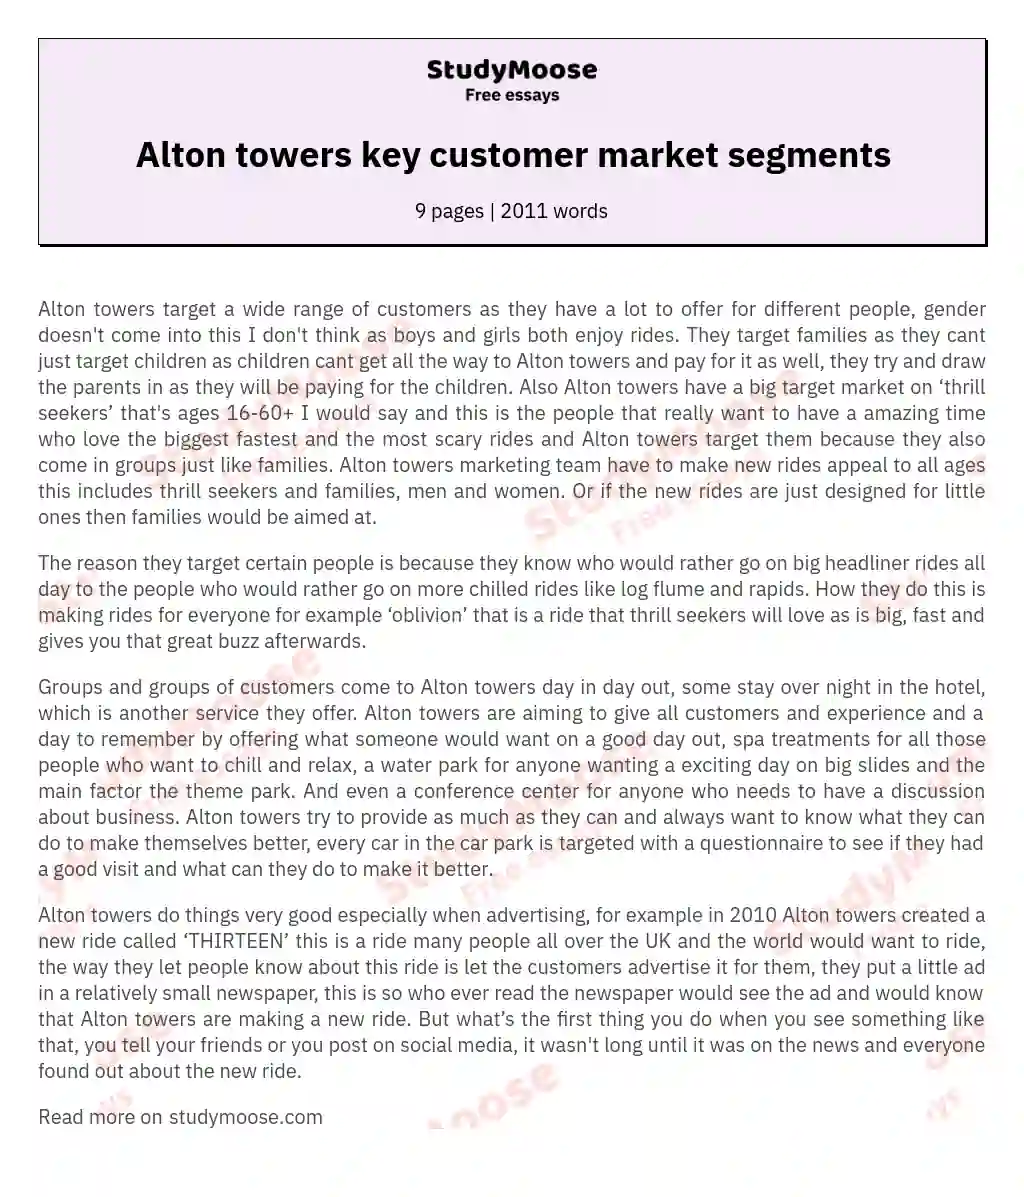 Alton towers key customer market segments essay